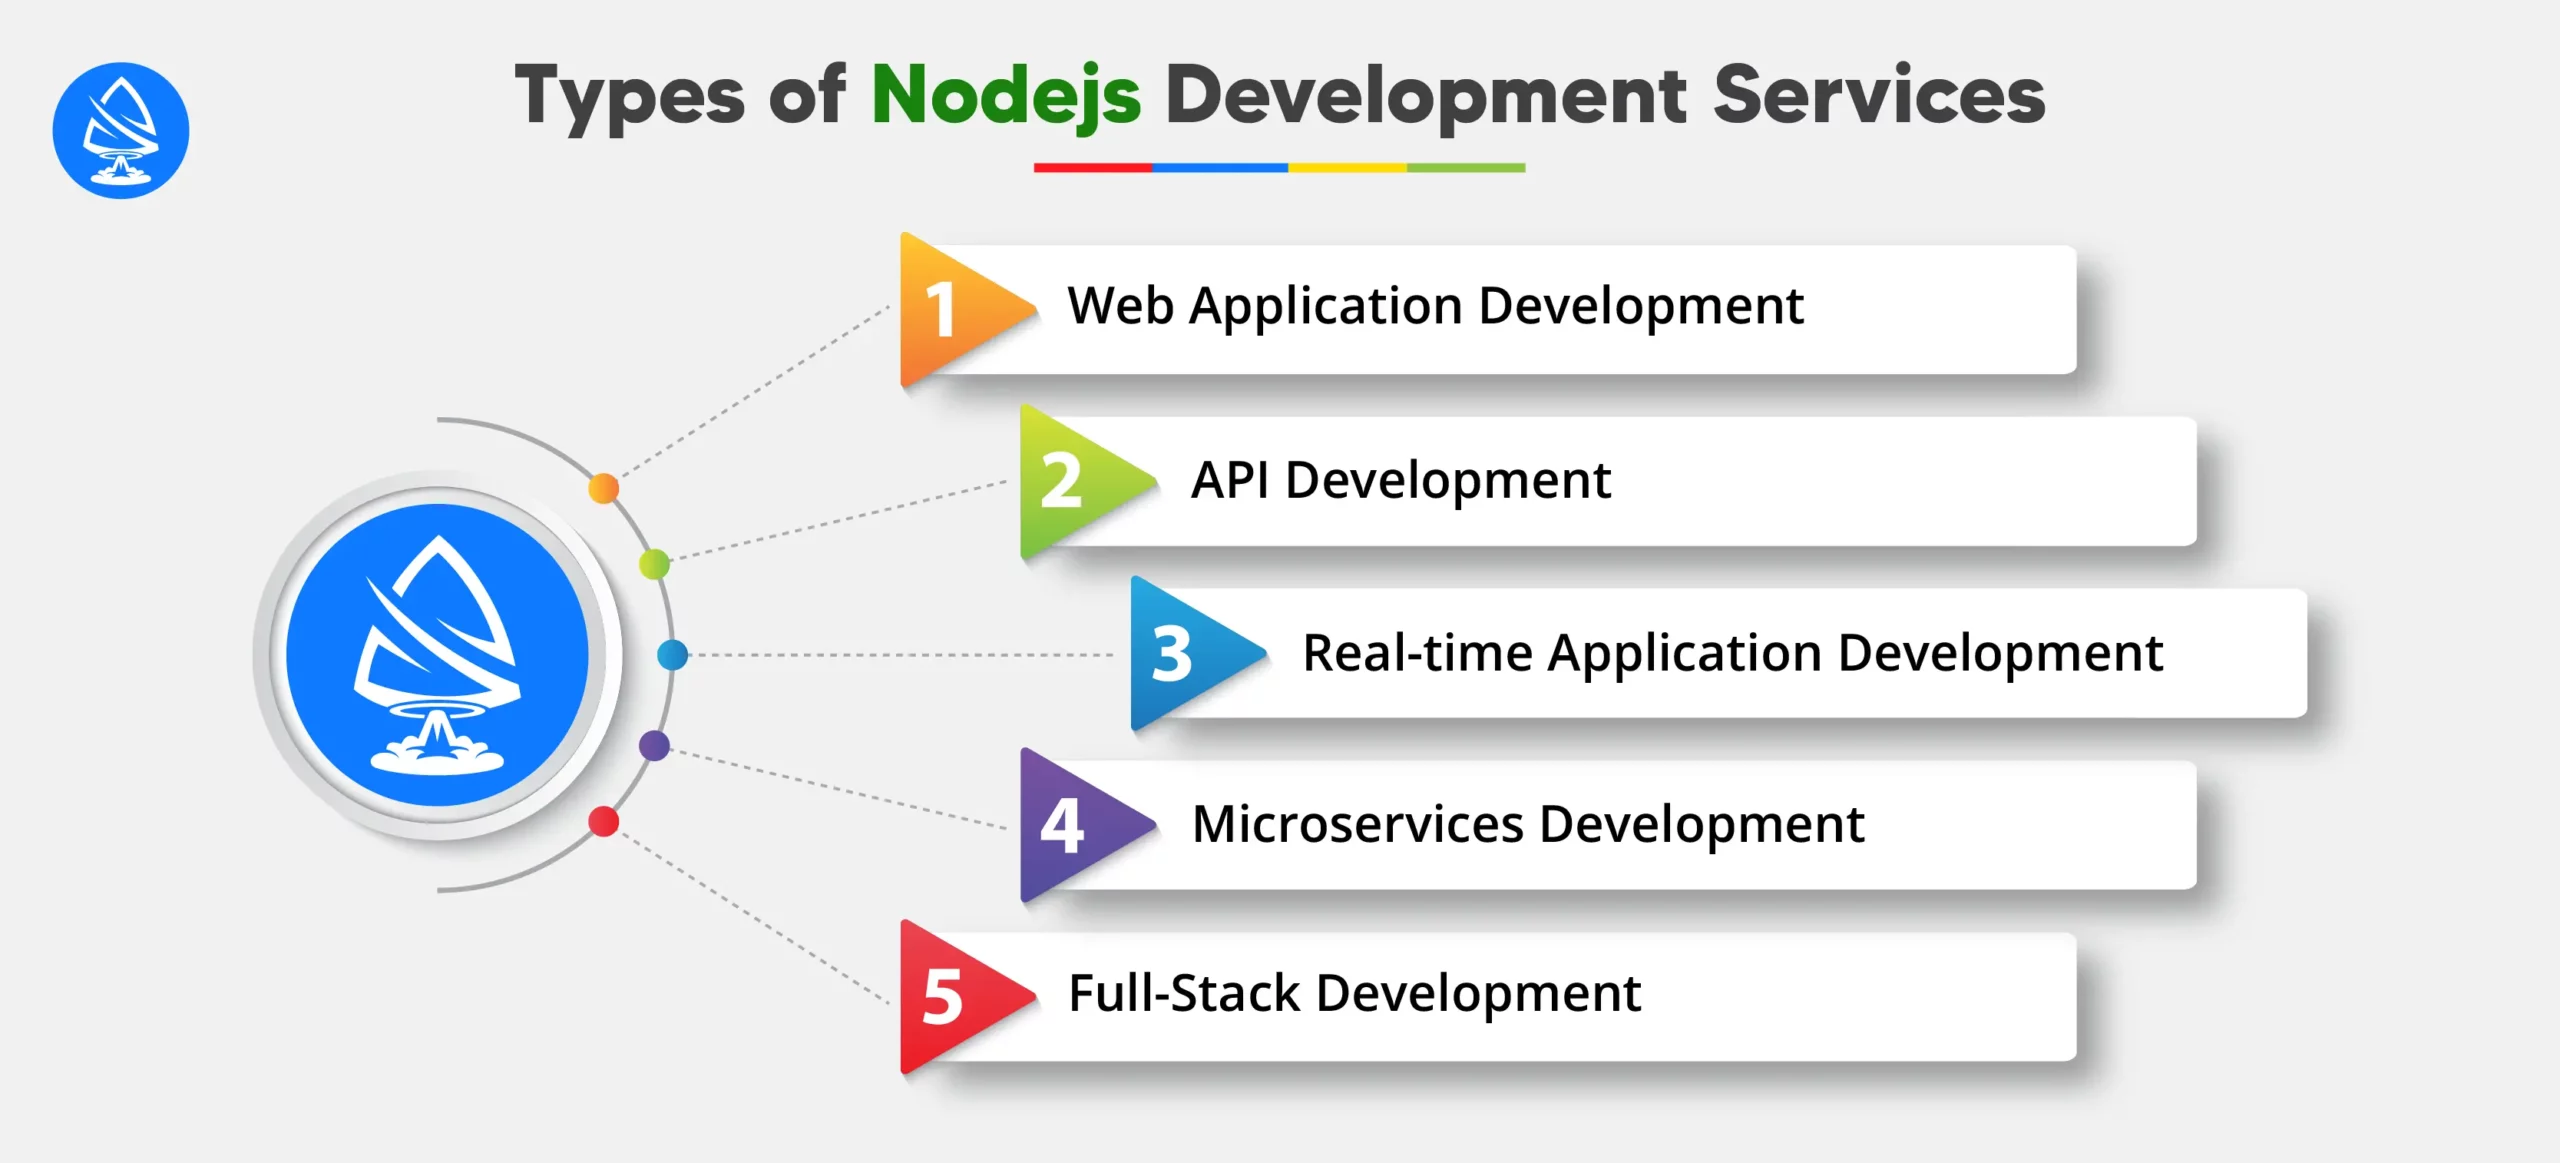 Types of Nodejs Development Services 